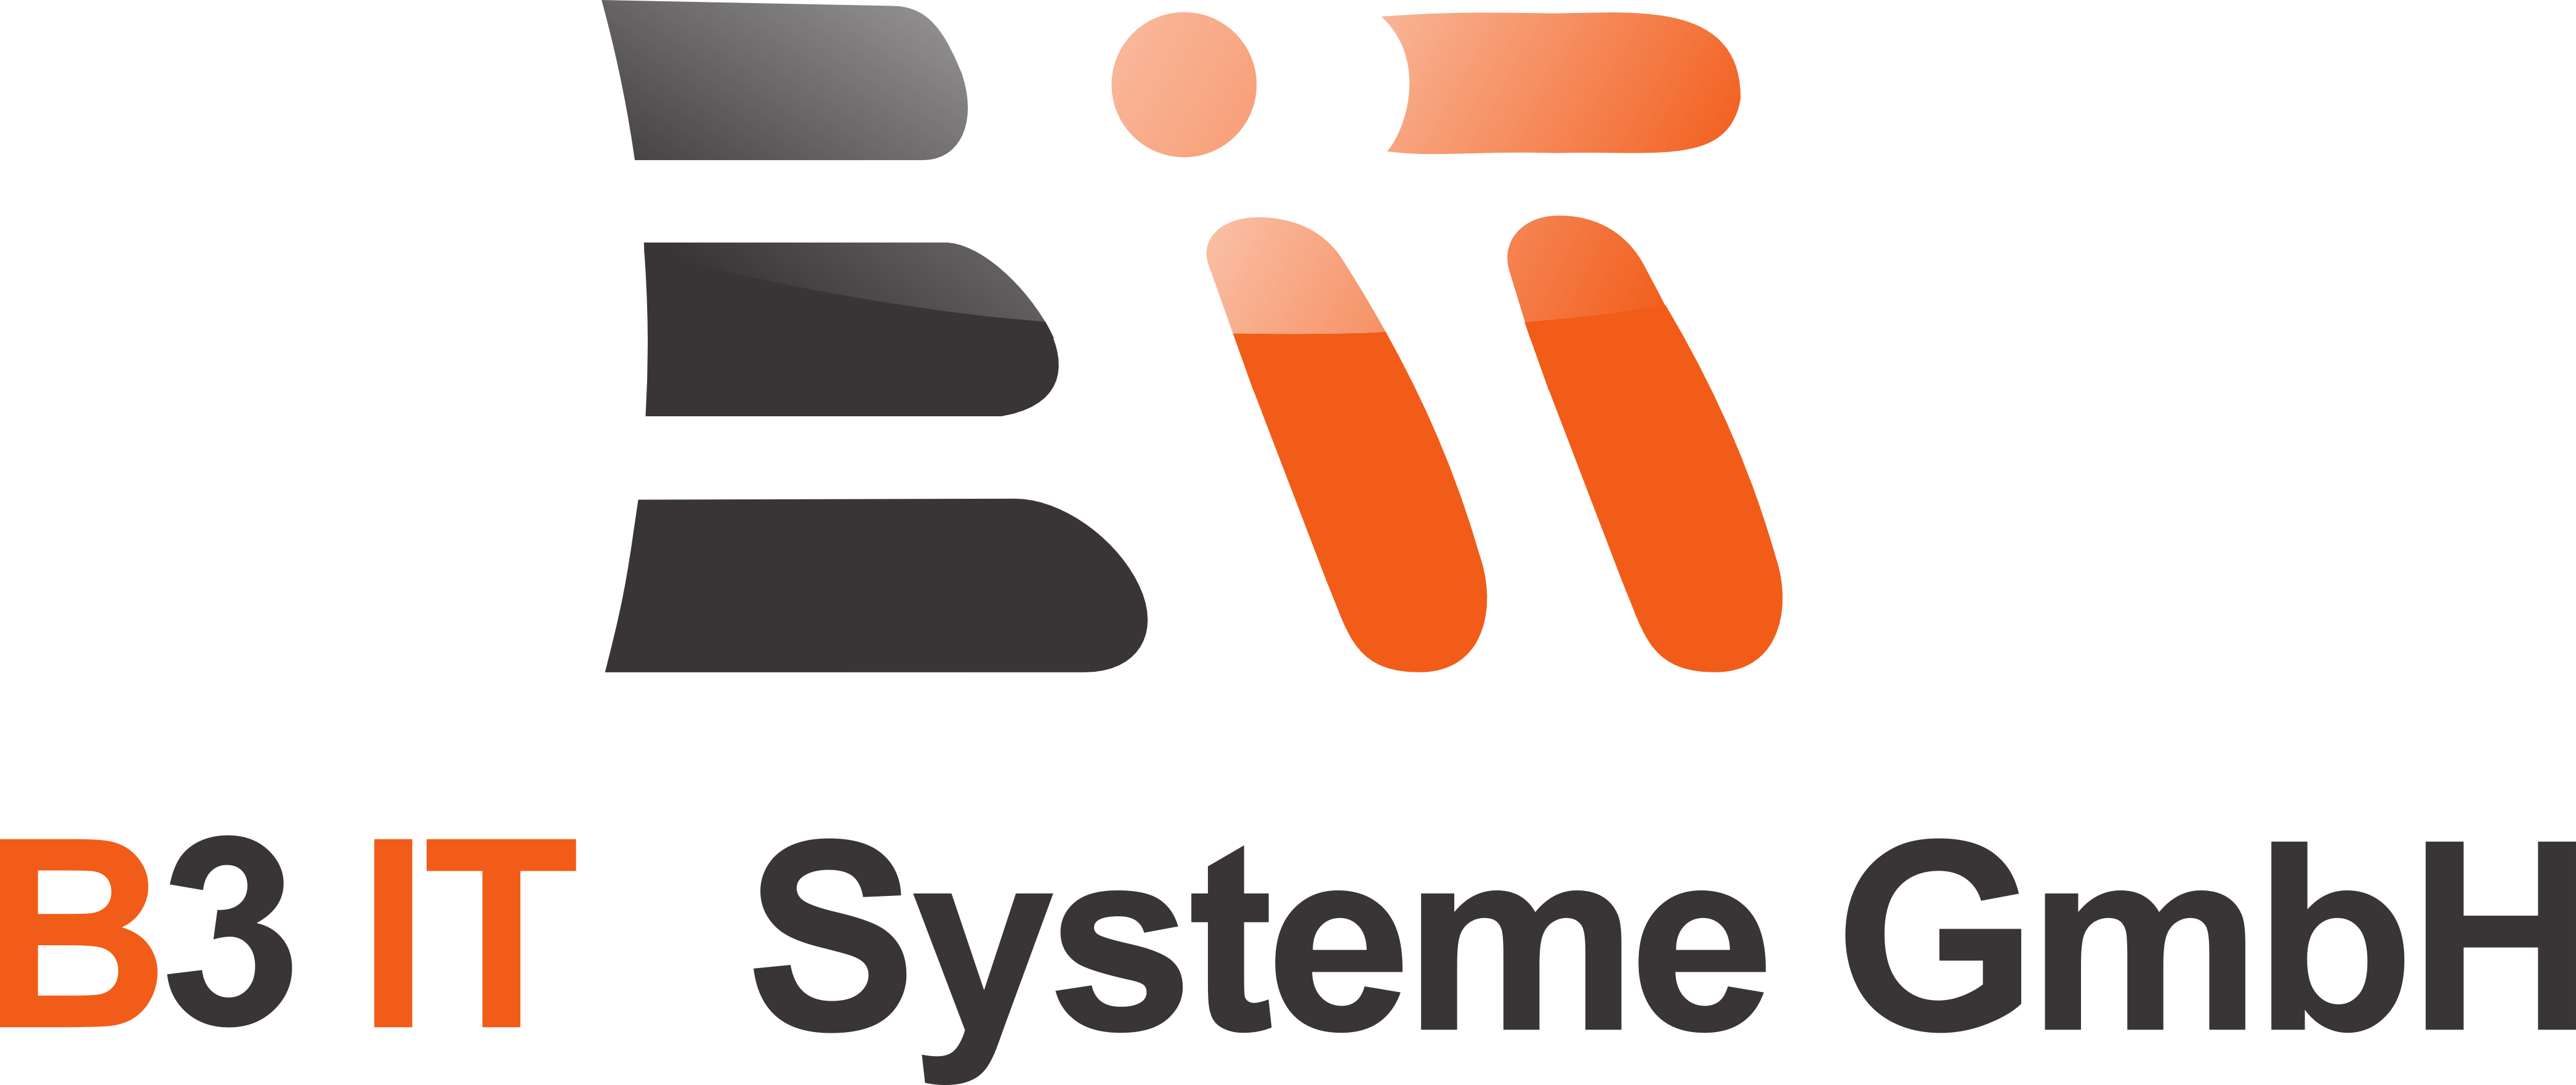 B3IT System GmbH - Logo